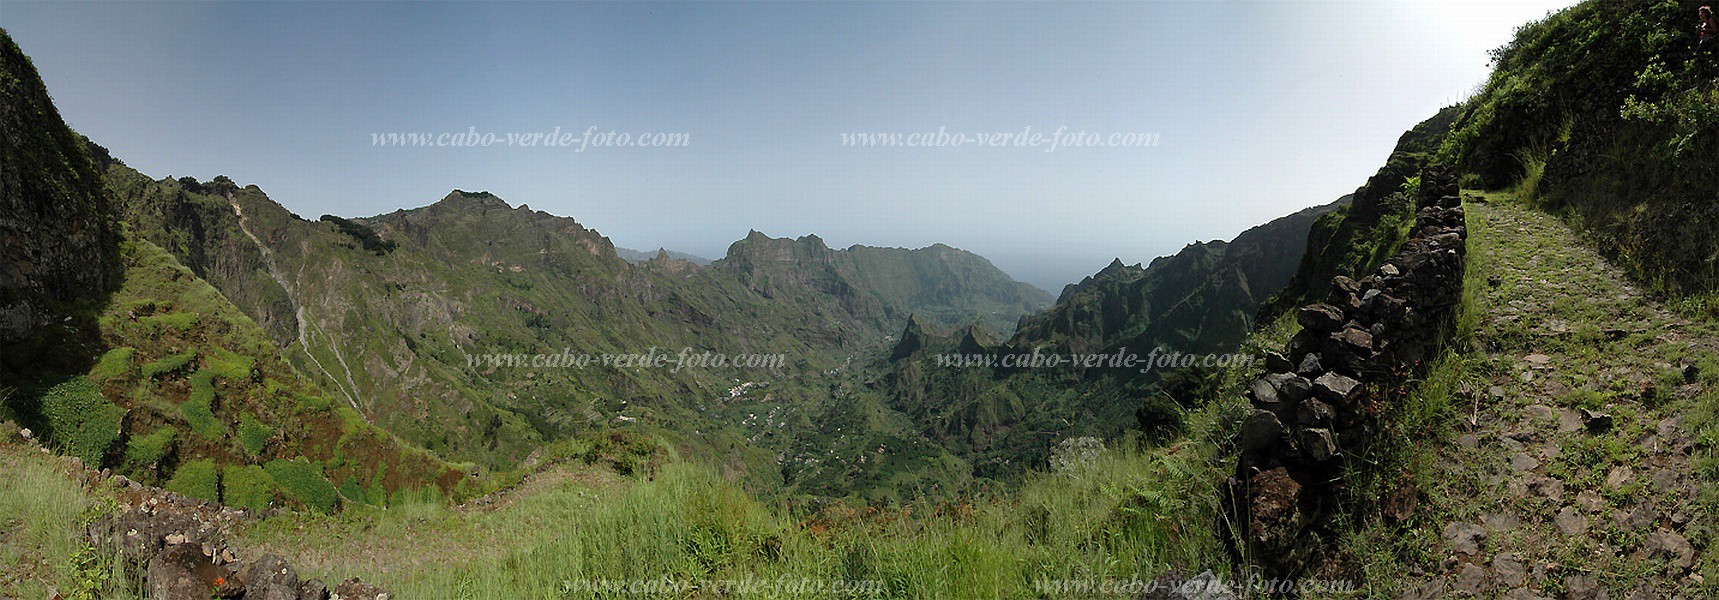 Insel: Santo Anto  Wanderweg: 108 Ort: Cabo da Ribeira Pal Motiv: Wanderweg Motivgruppe: Landscape © Pitt Reitmaier www.Cabo-Verde-Foto.com